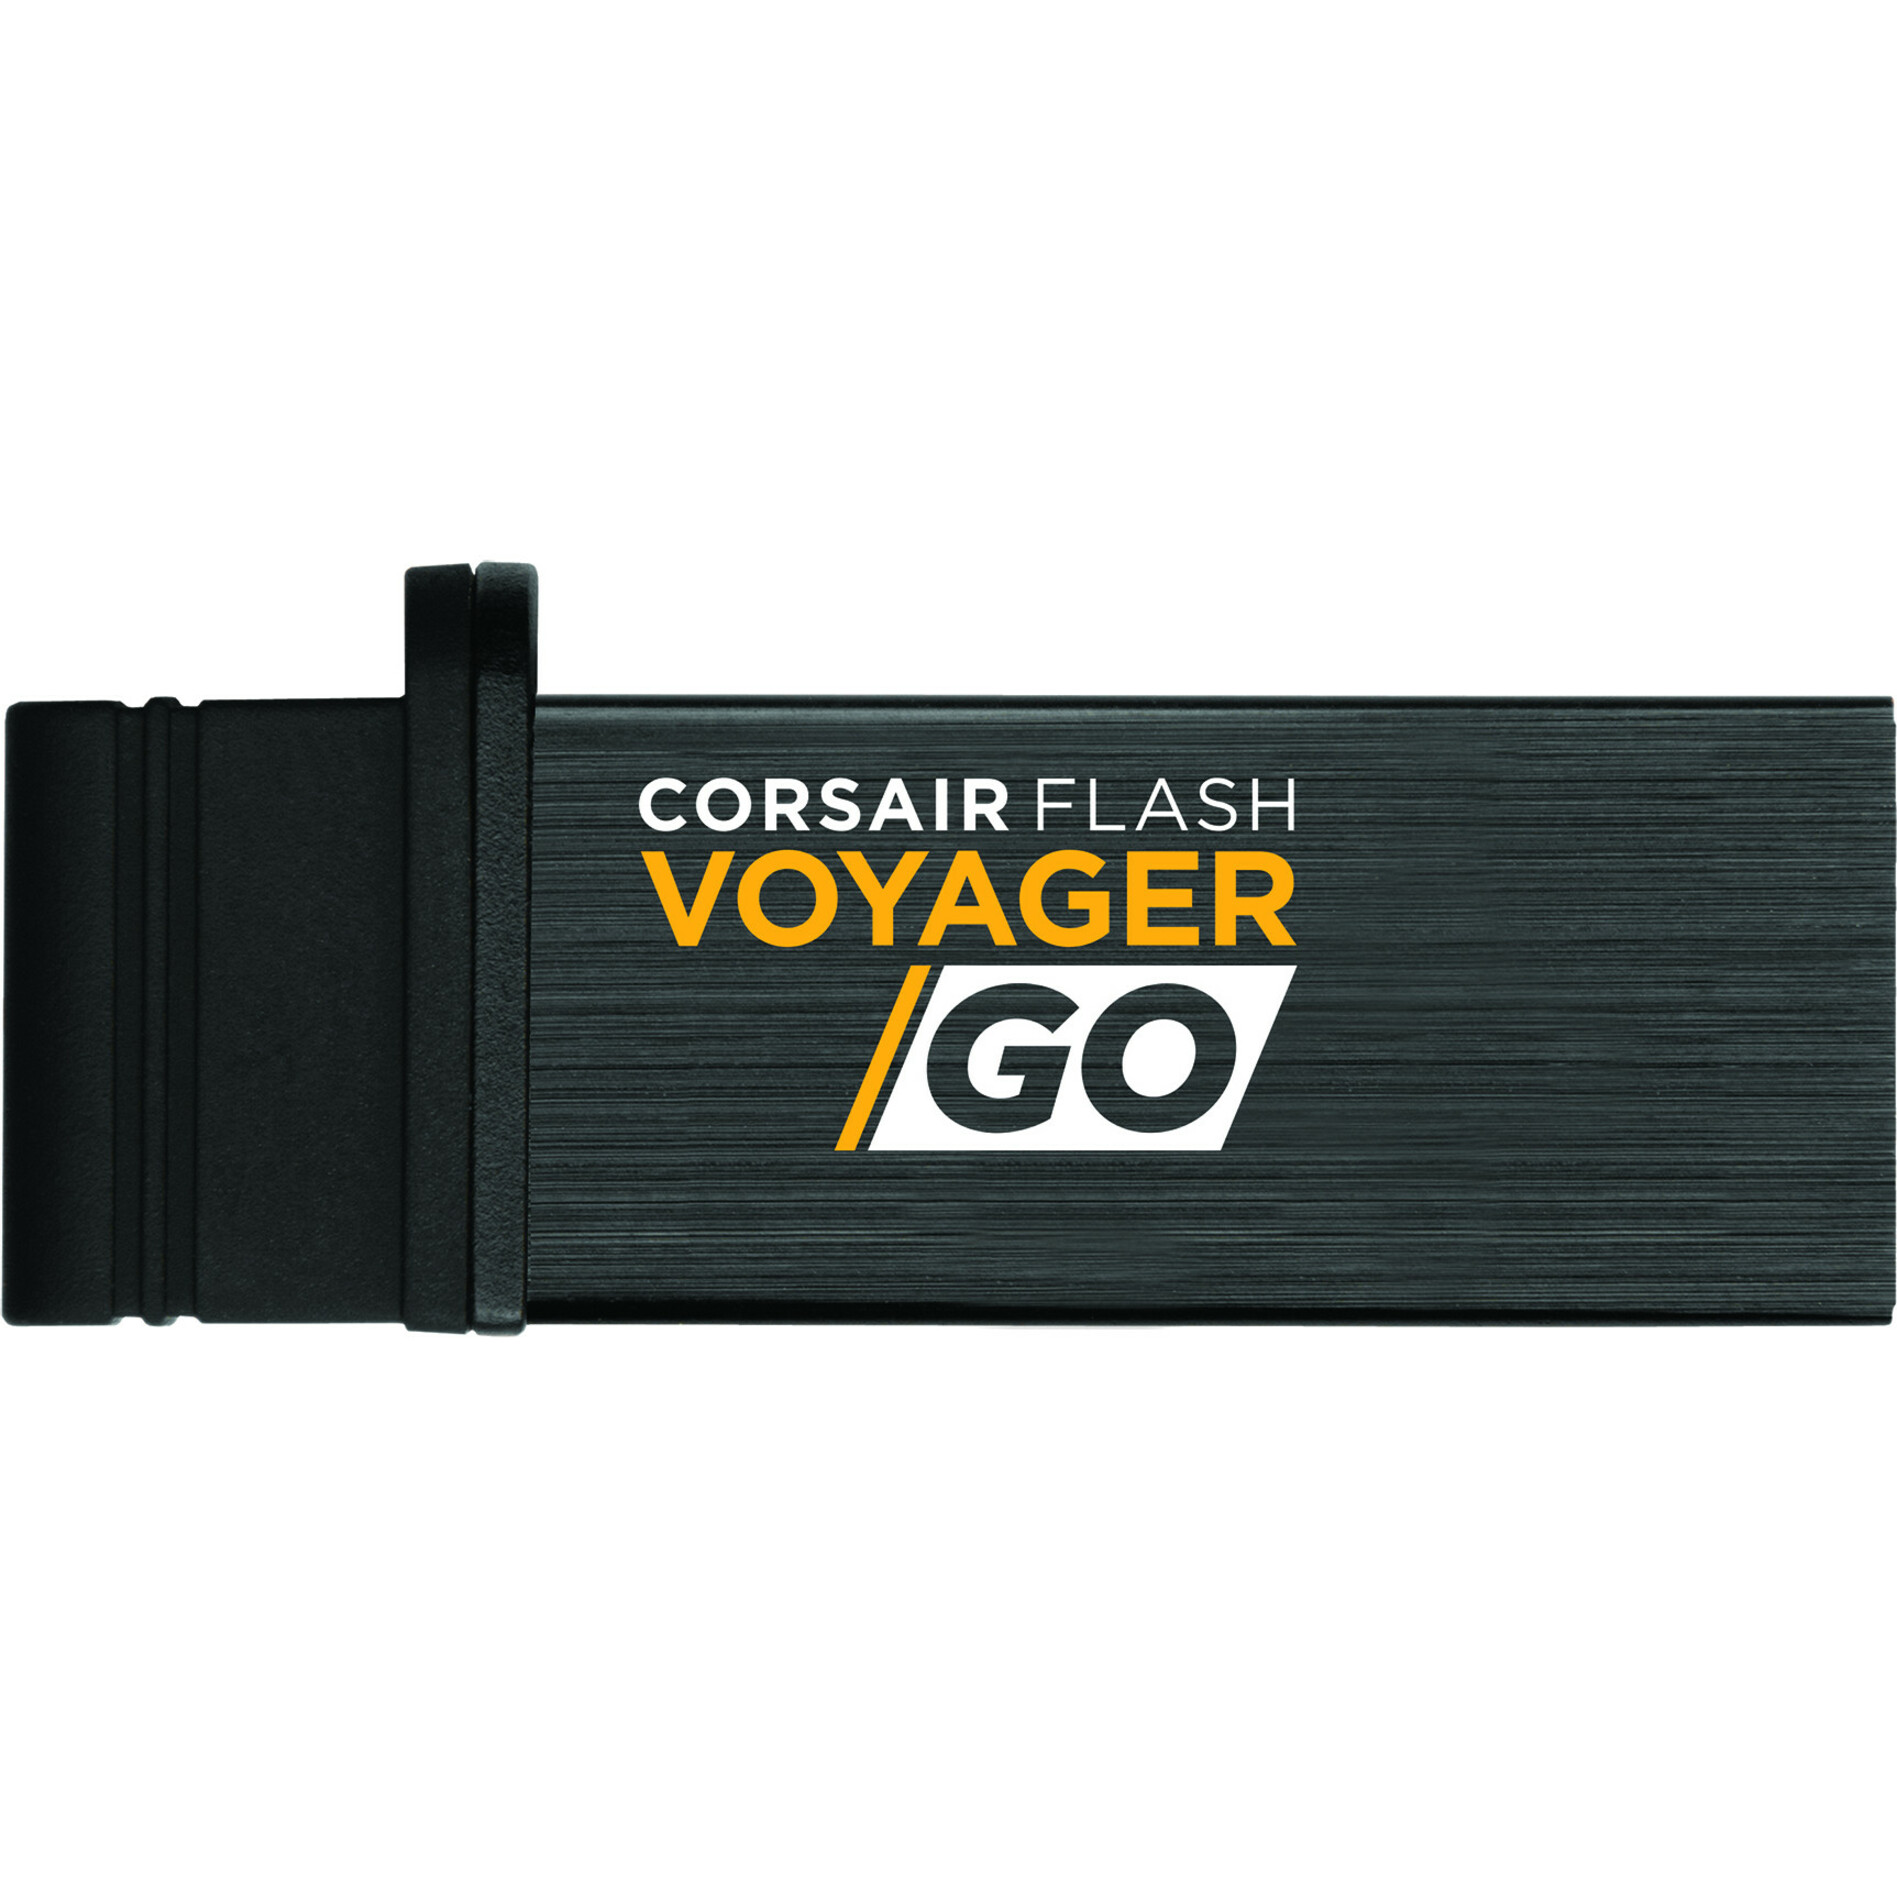 16GB FLASH VOYAGER GO USB 3.0 - image 3 of 3